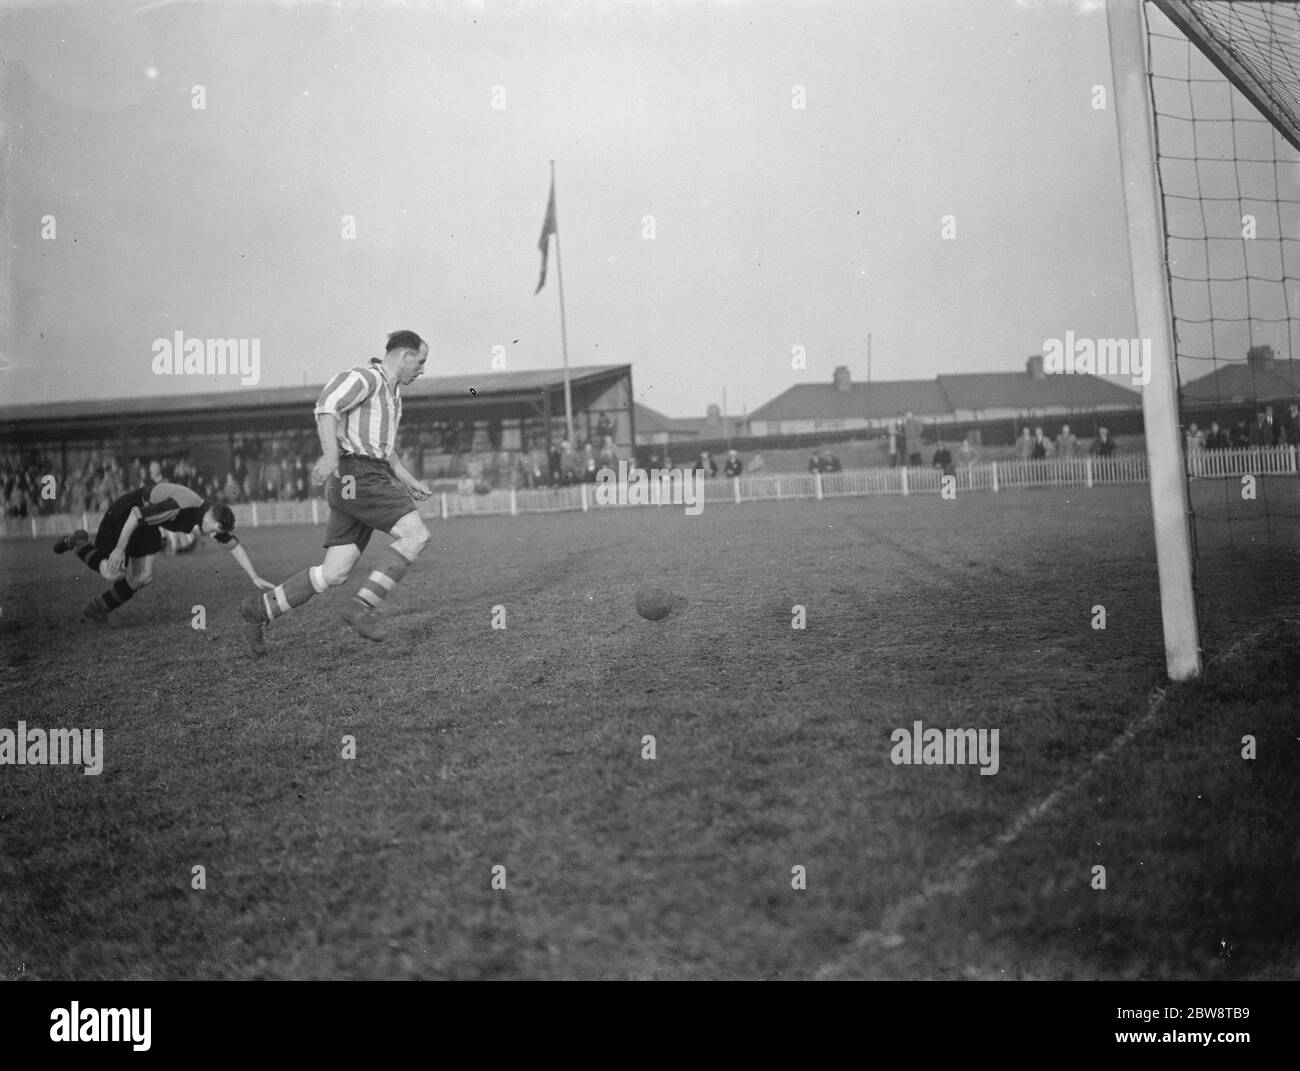 Dartford Reserves vs. Sittingbourne - Kent League - 29/10/38 . Der Spieler nimmt den Ball um den Torwart. 1936 Stockfoto